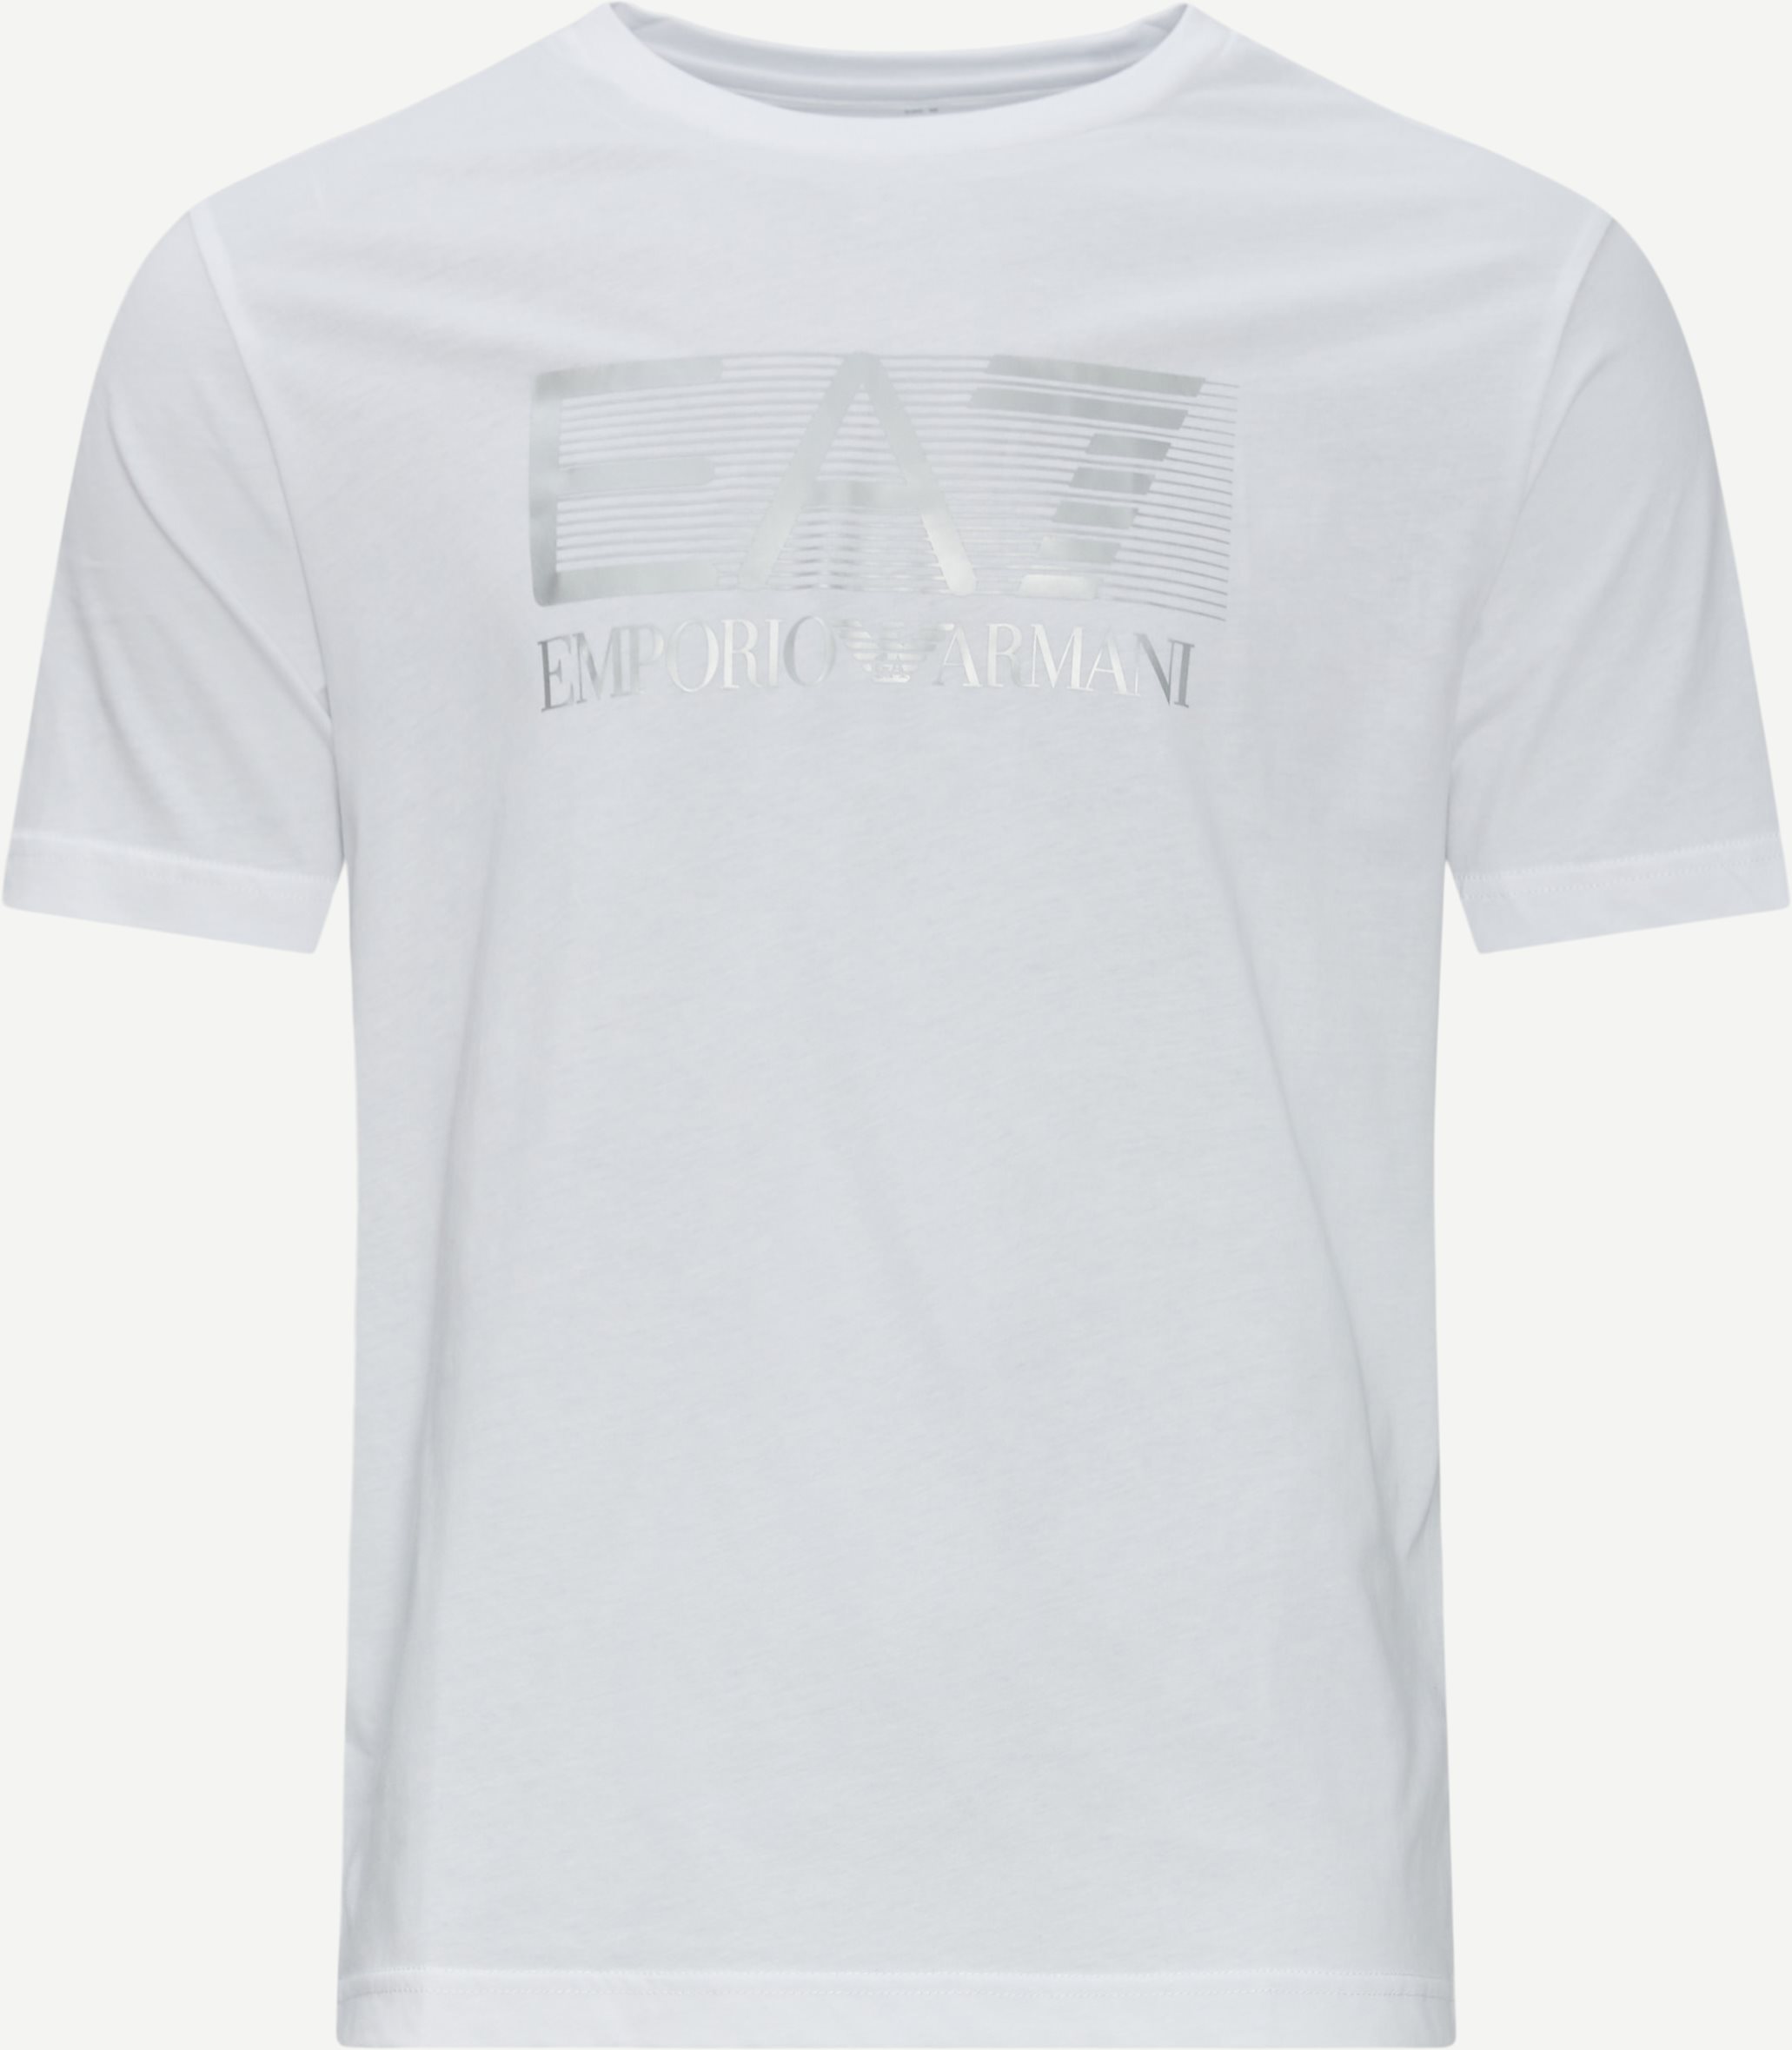 T-shirts - Regular fit - White